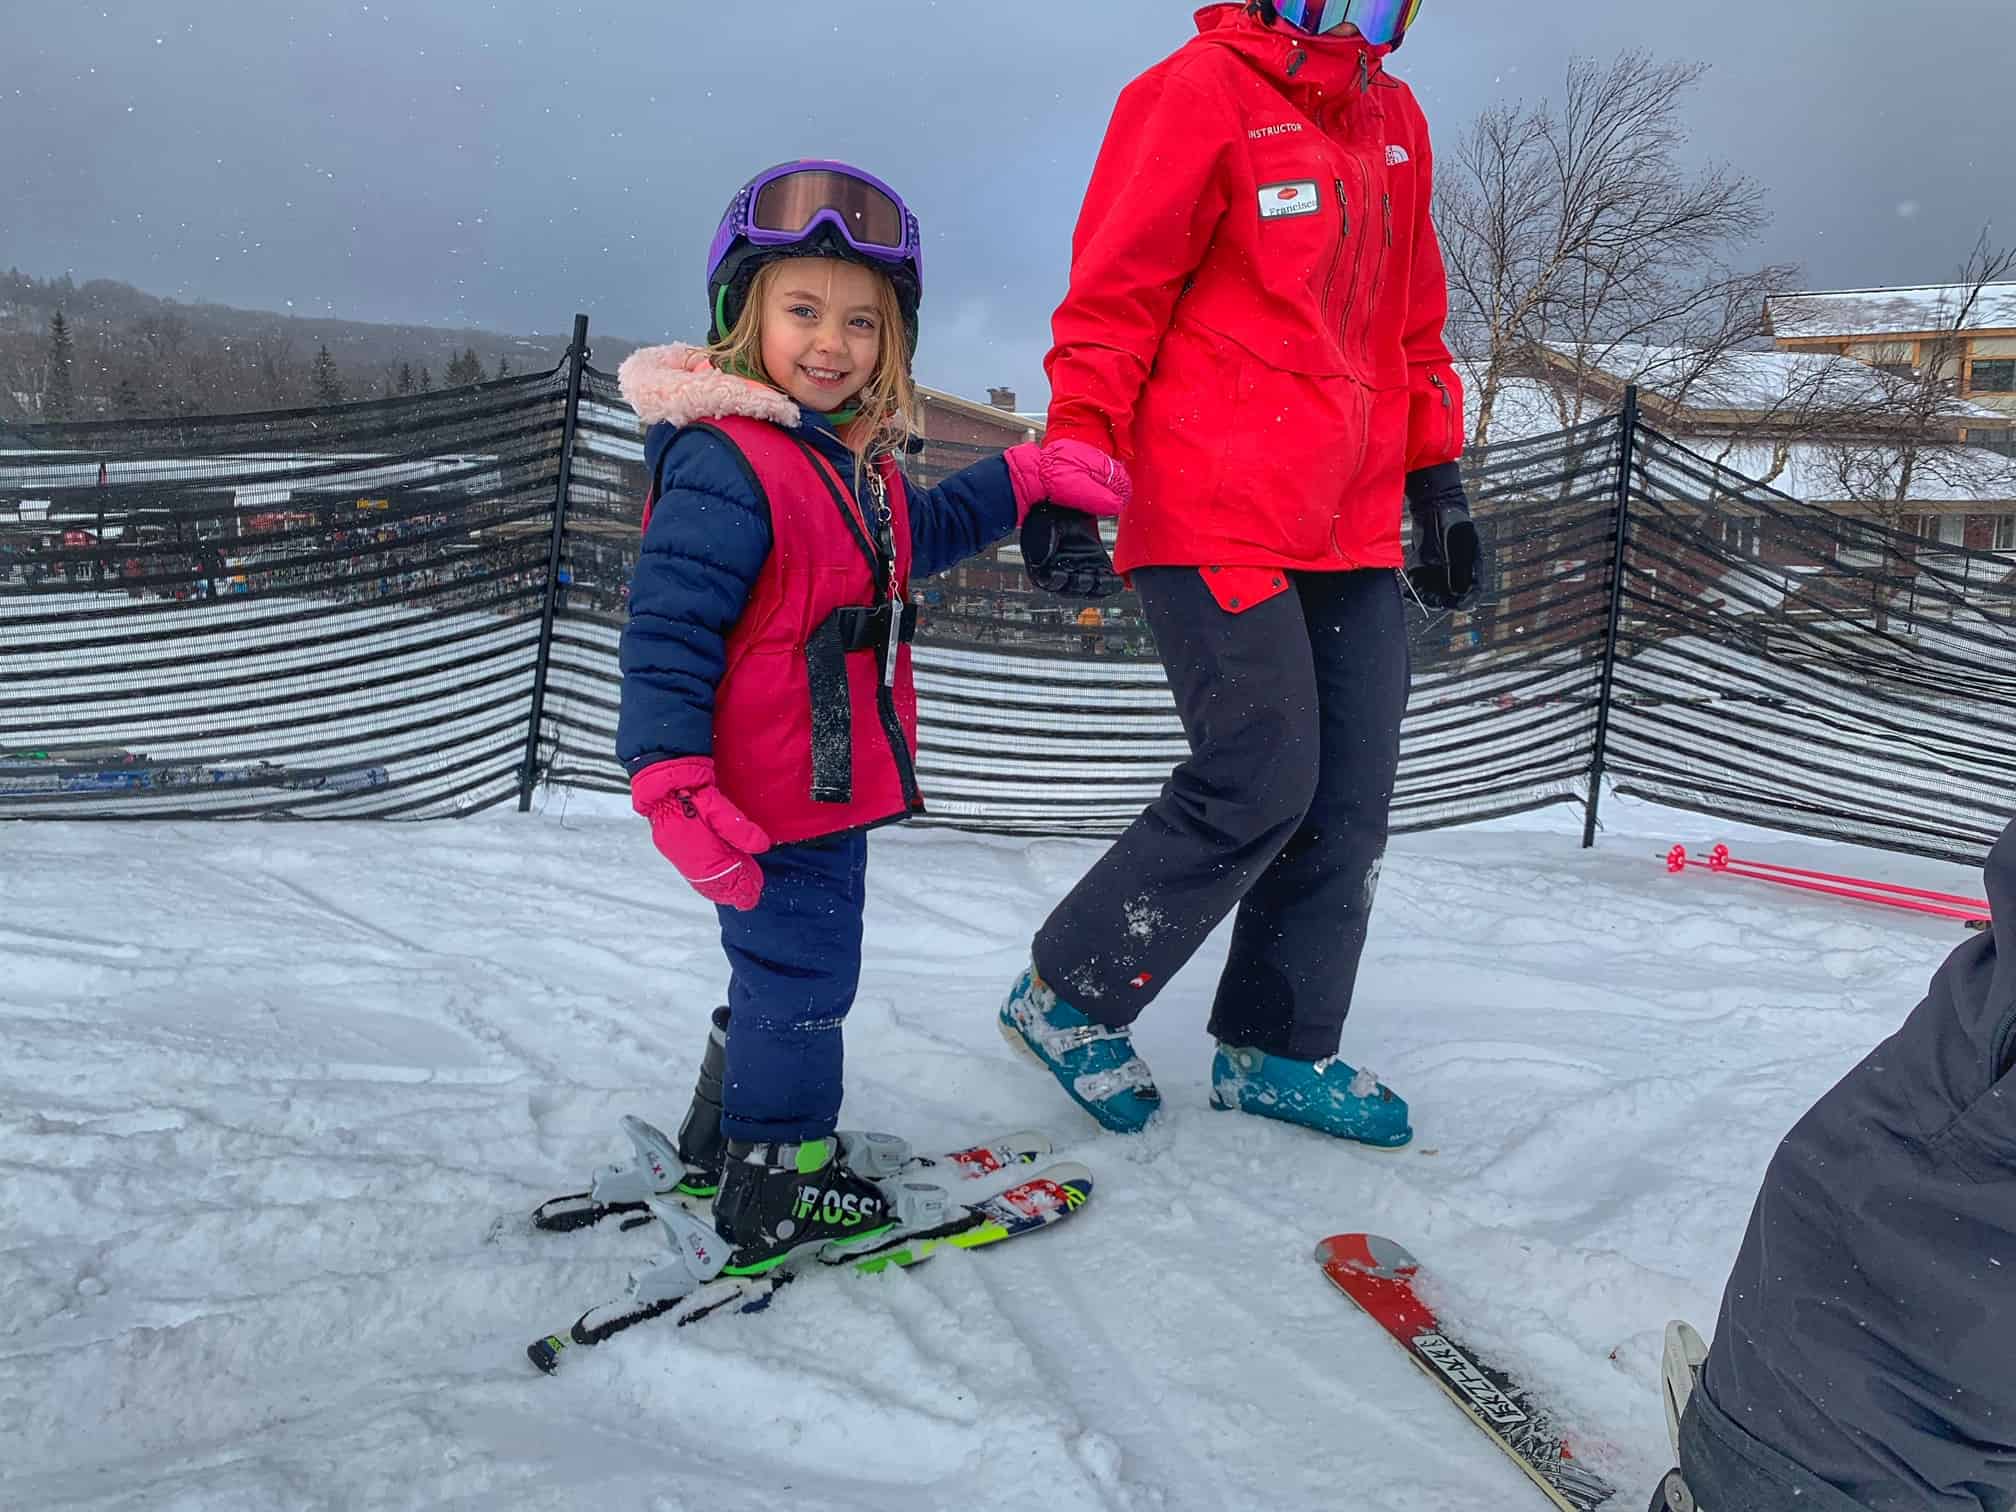 Family ski trip to Stratton Mountain Resort Scarlett Lee - January 2020